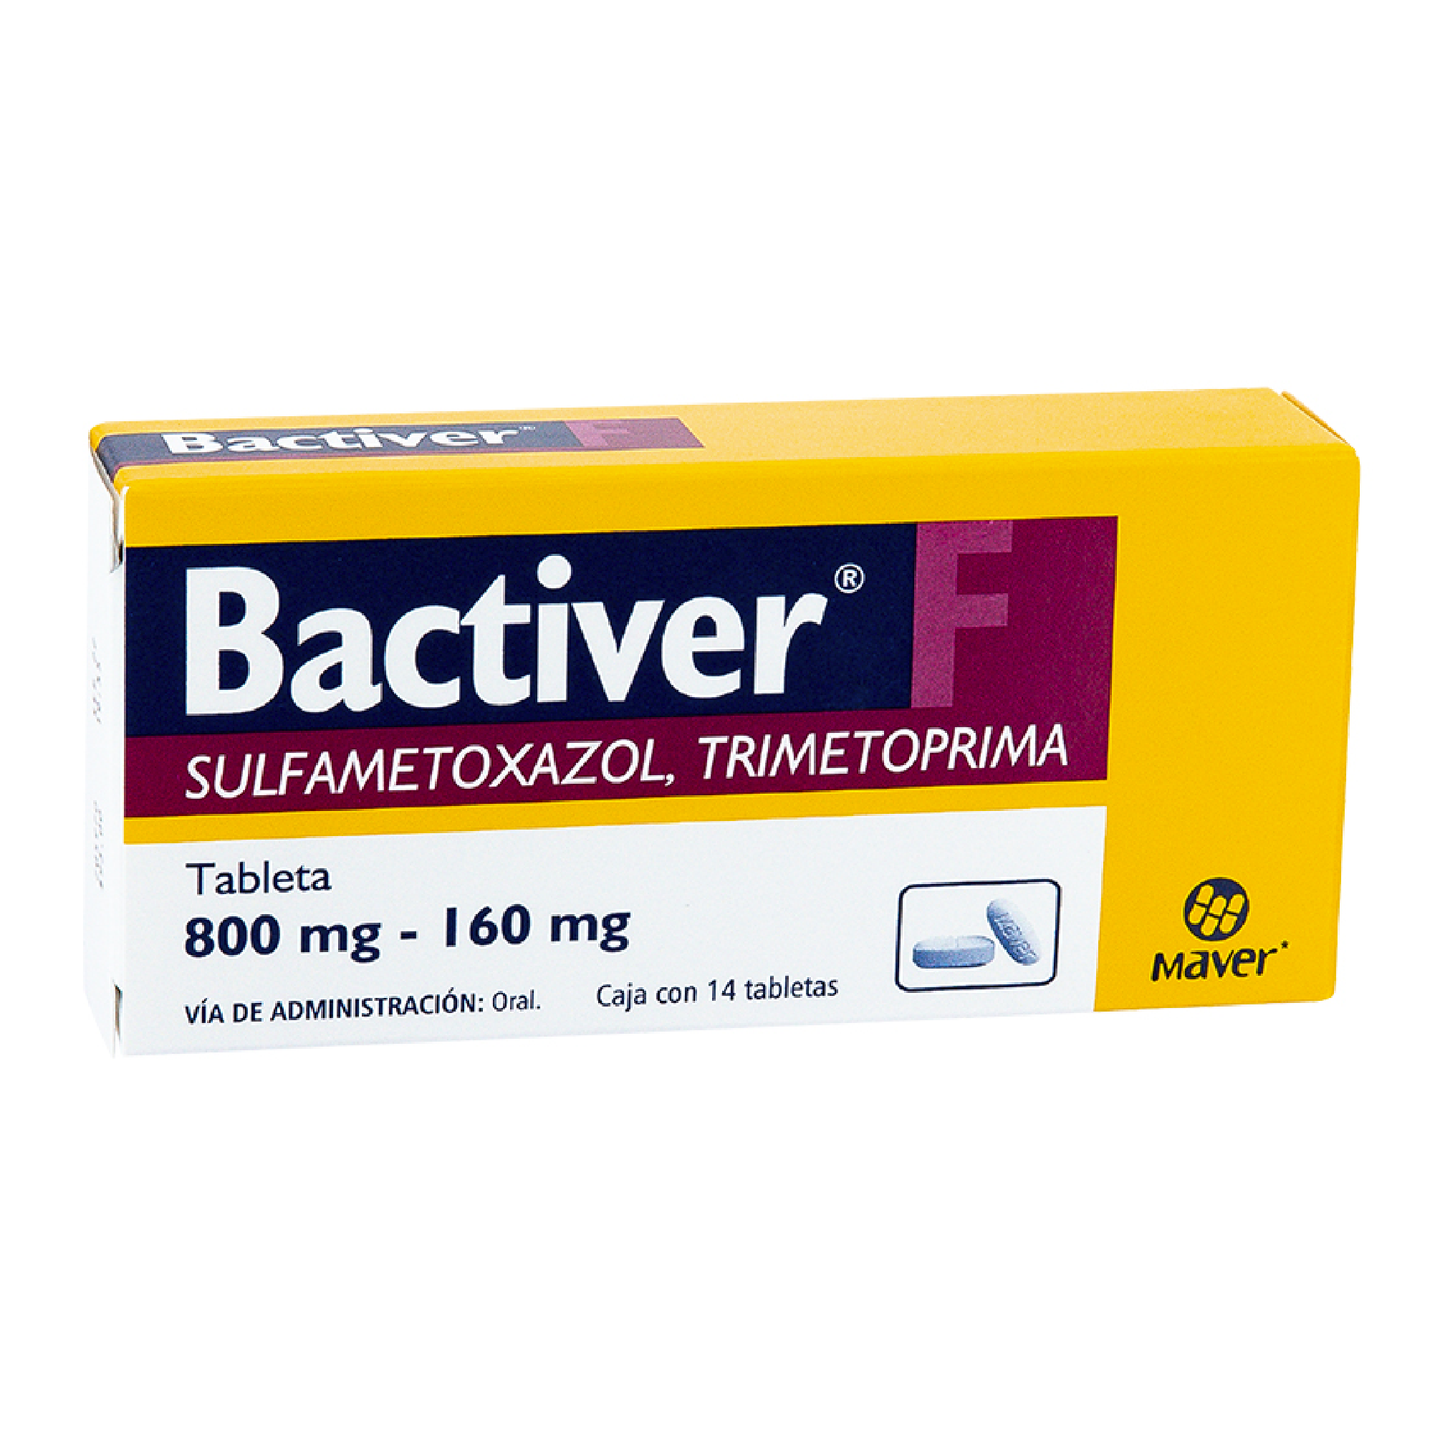 Bactiver (Sulfametoxazol, Trimetoprima) Tab 800mg/160mg Cja c 14 tabs